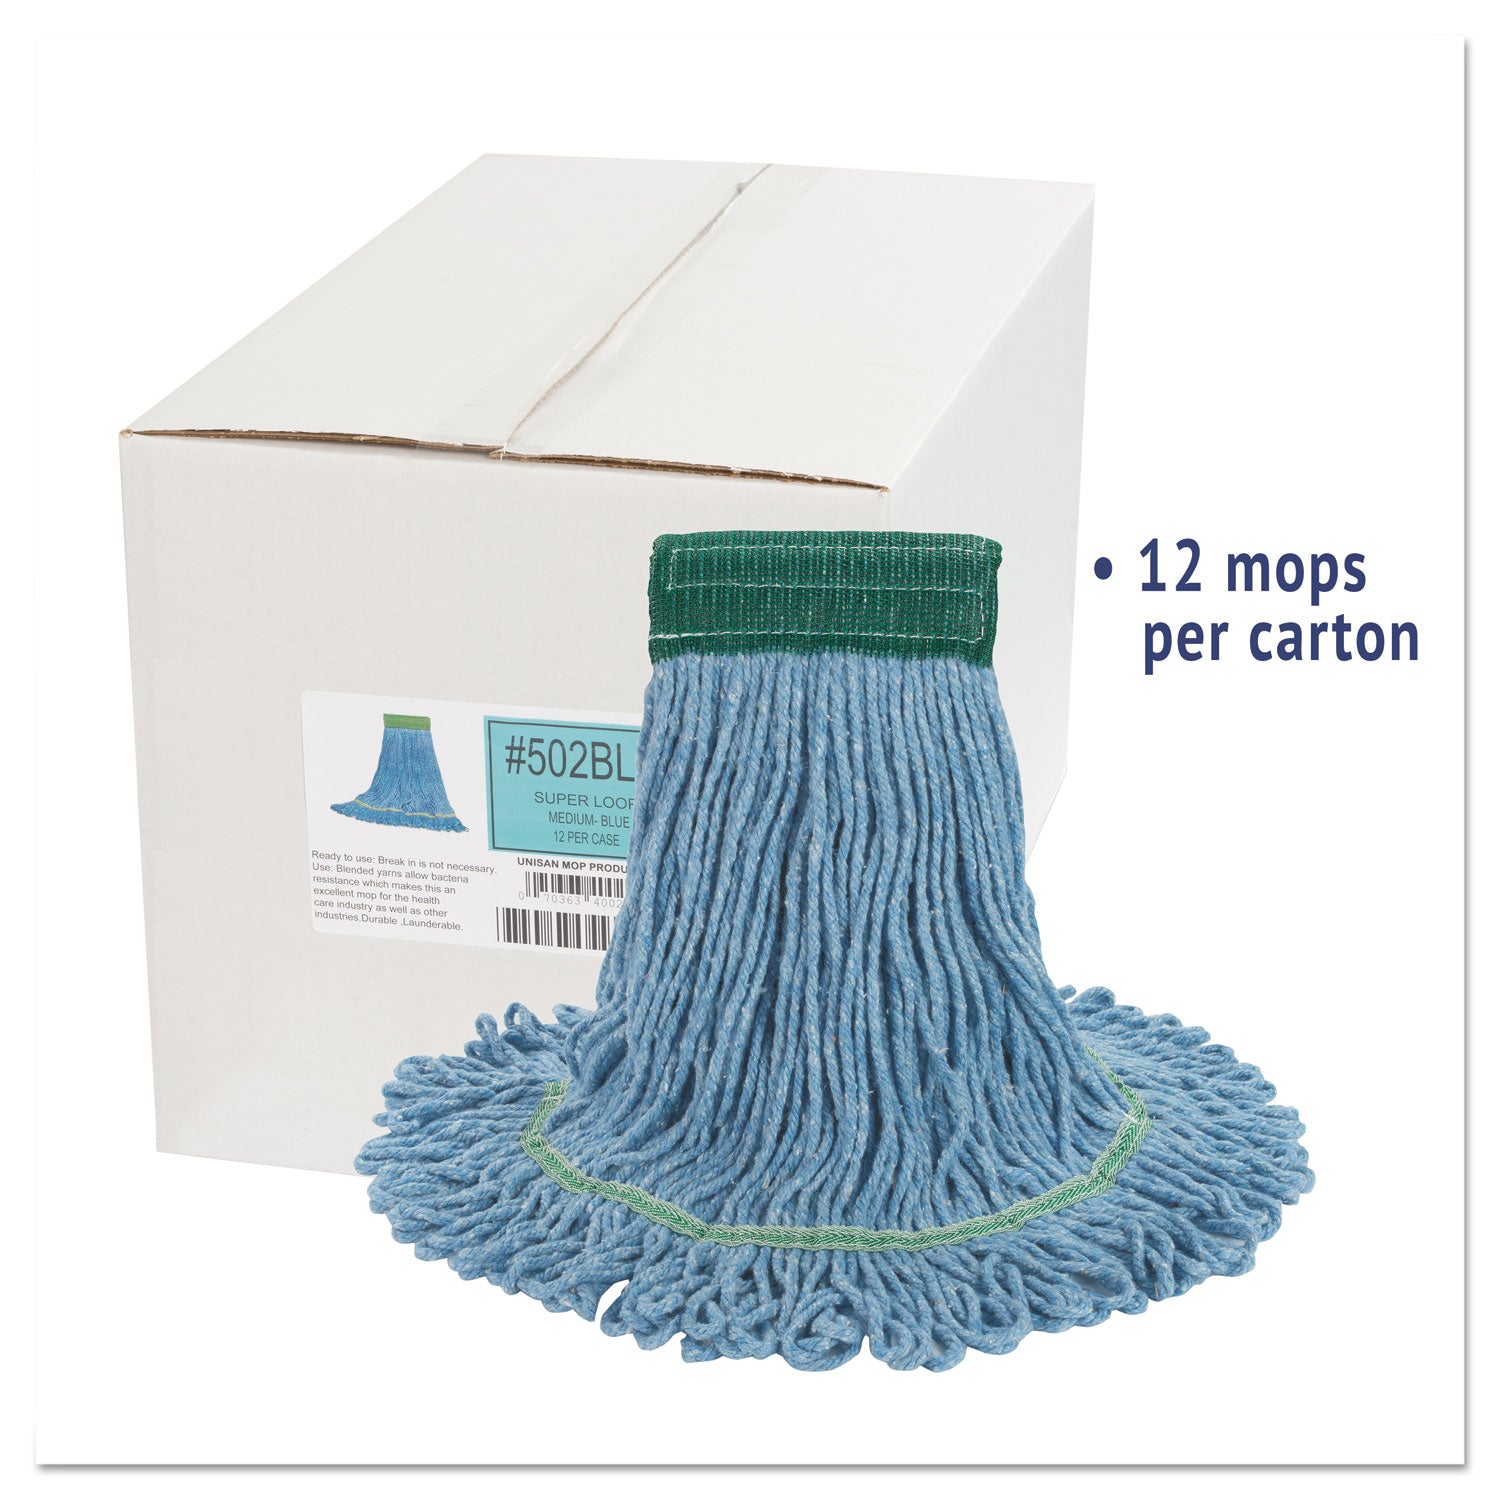 super-loop-wet-mop-head-cotton-synthetic-fiber-5-headband-medium-size-blue-12-carton_bwk502blct - 2